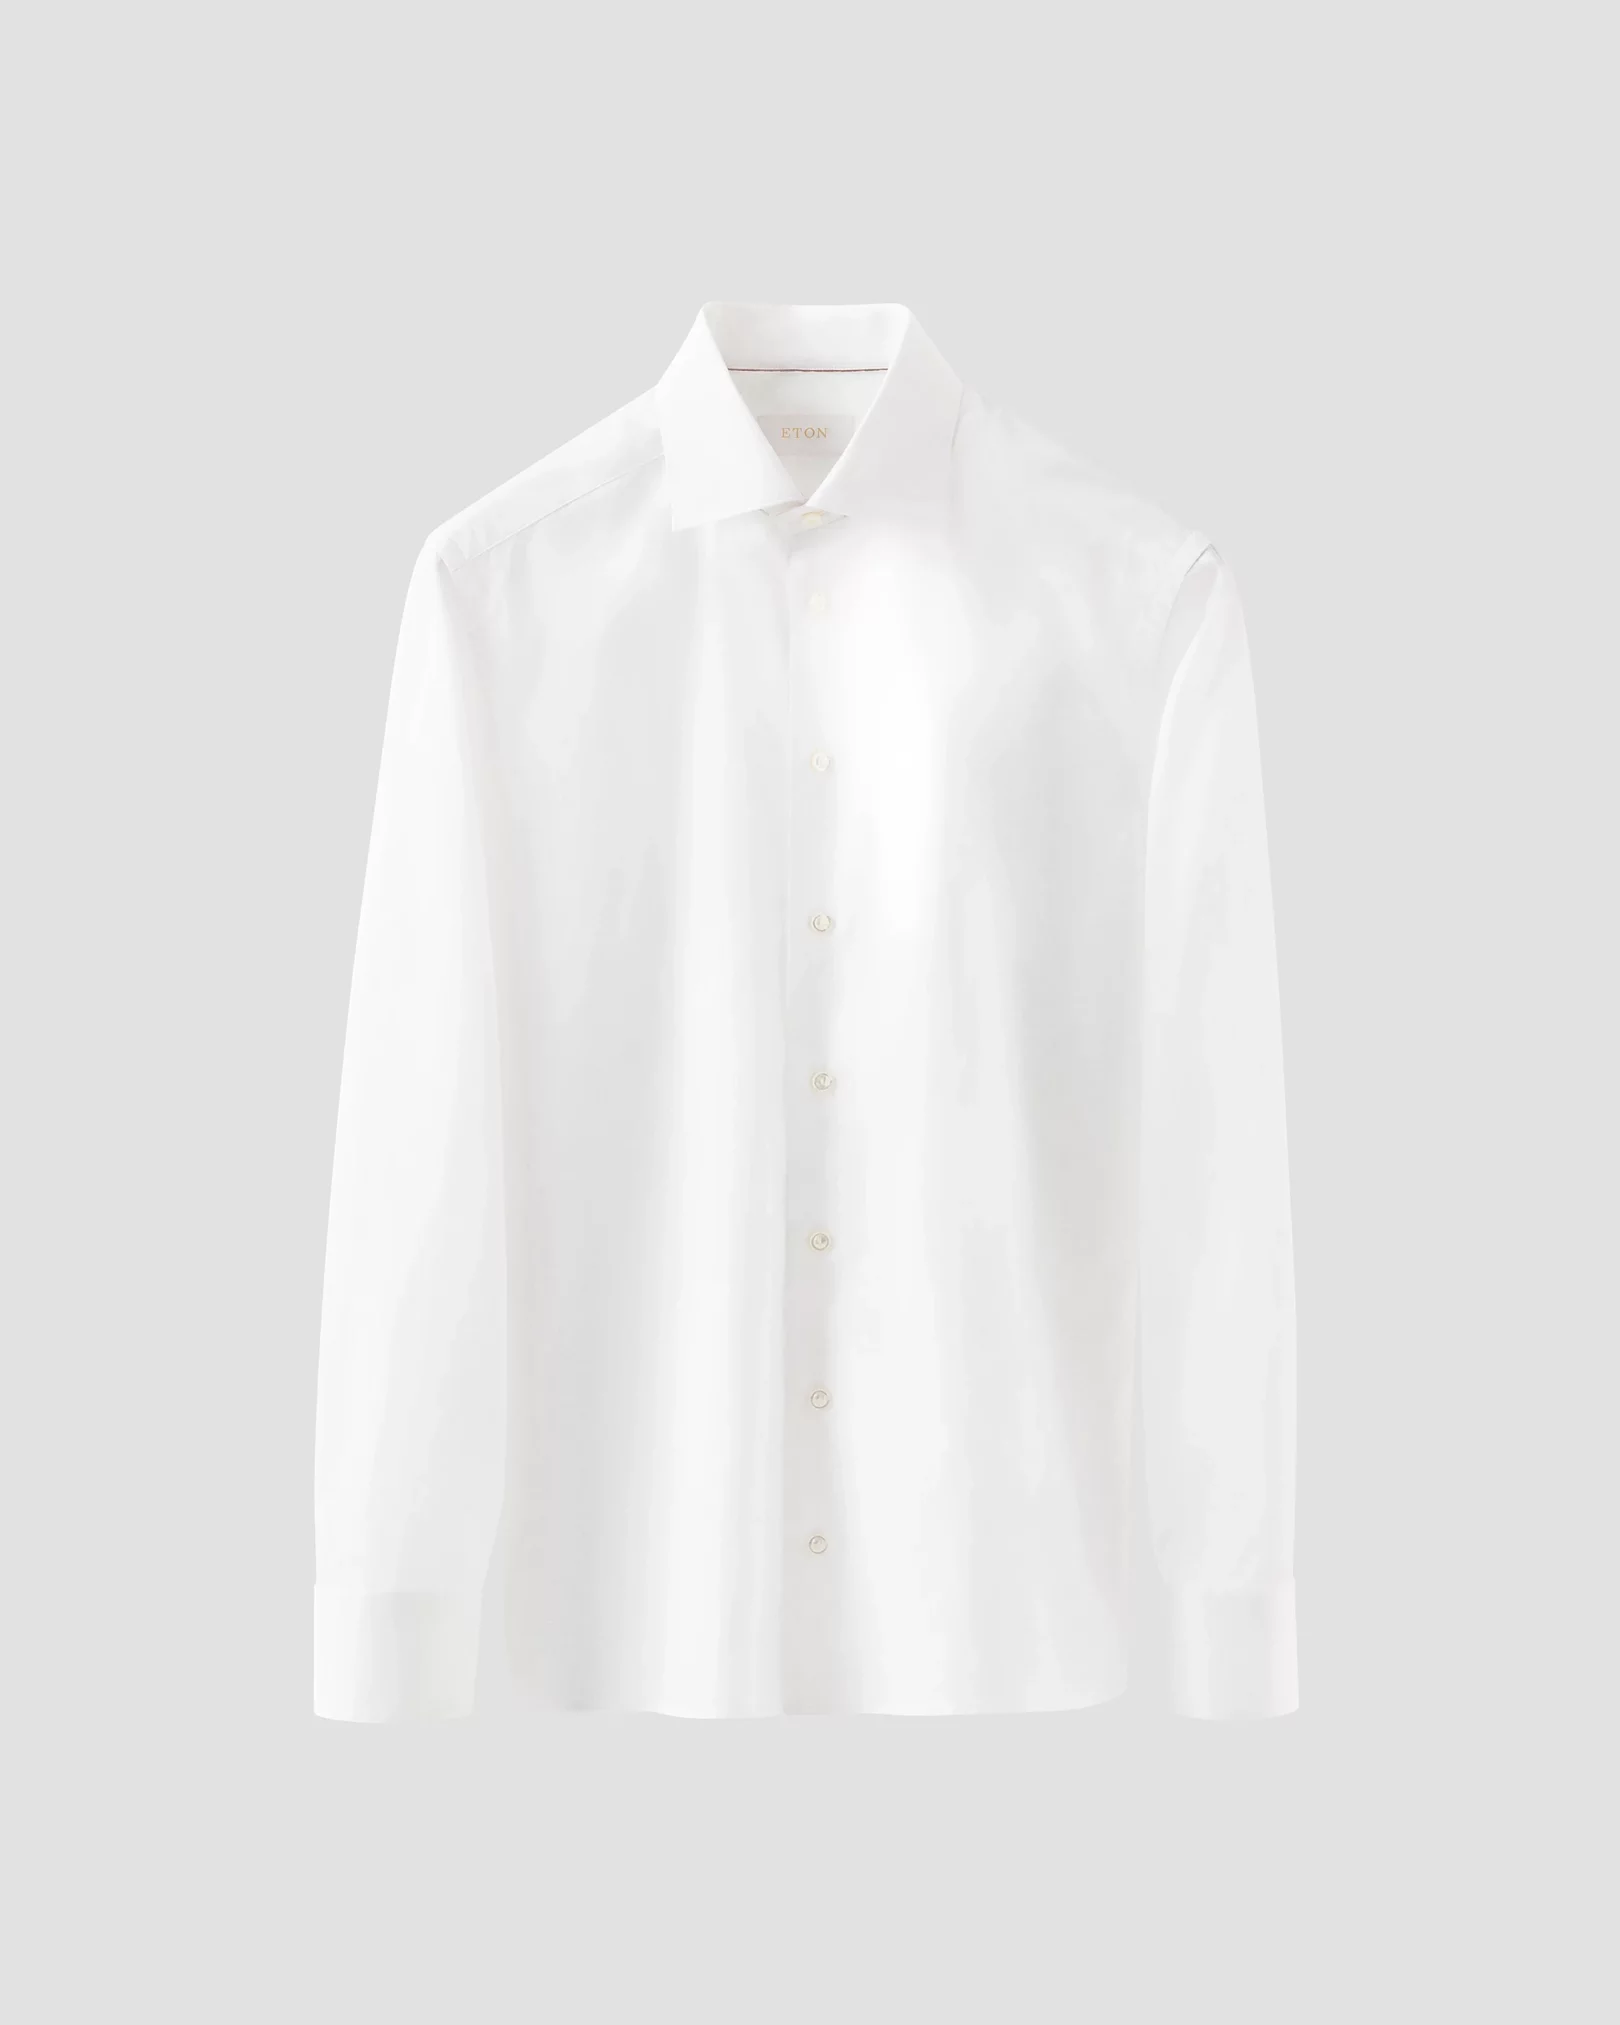 Eton - White Solid Elevated Twill Shirt